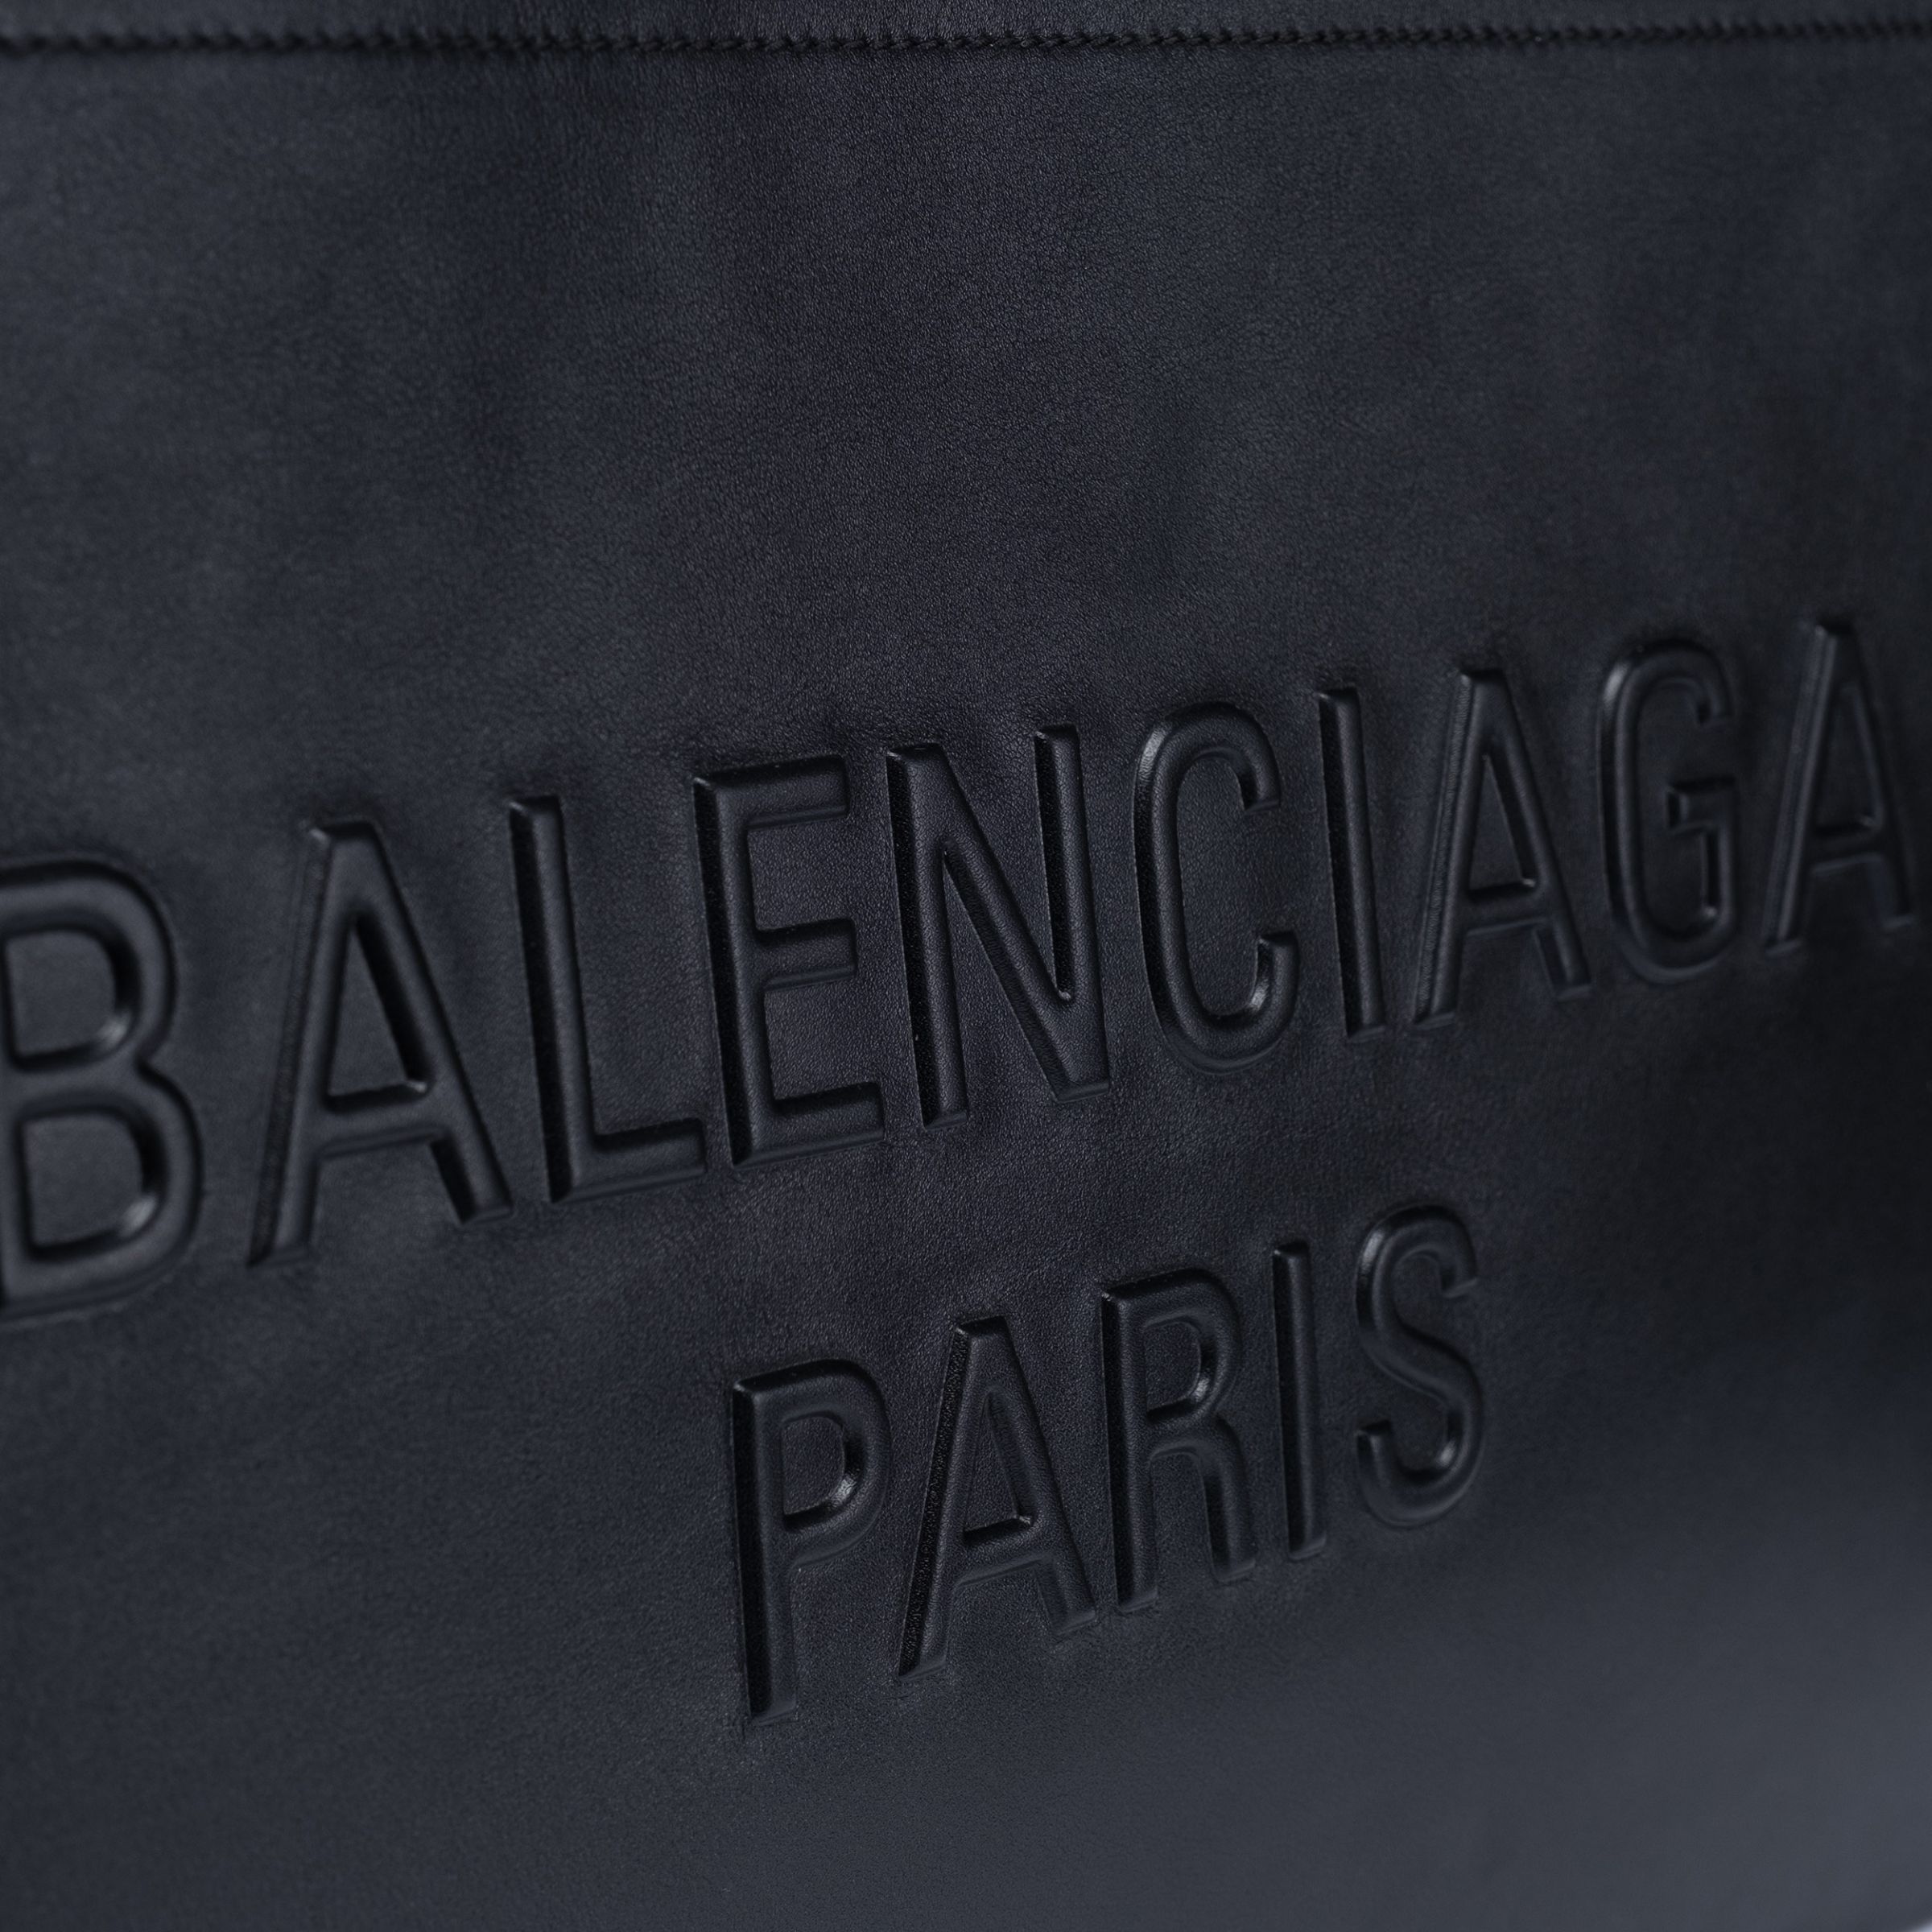 Сумка Balenciaga Duty Free Medium черная